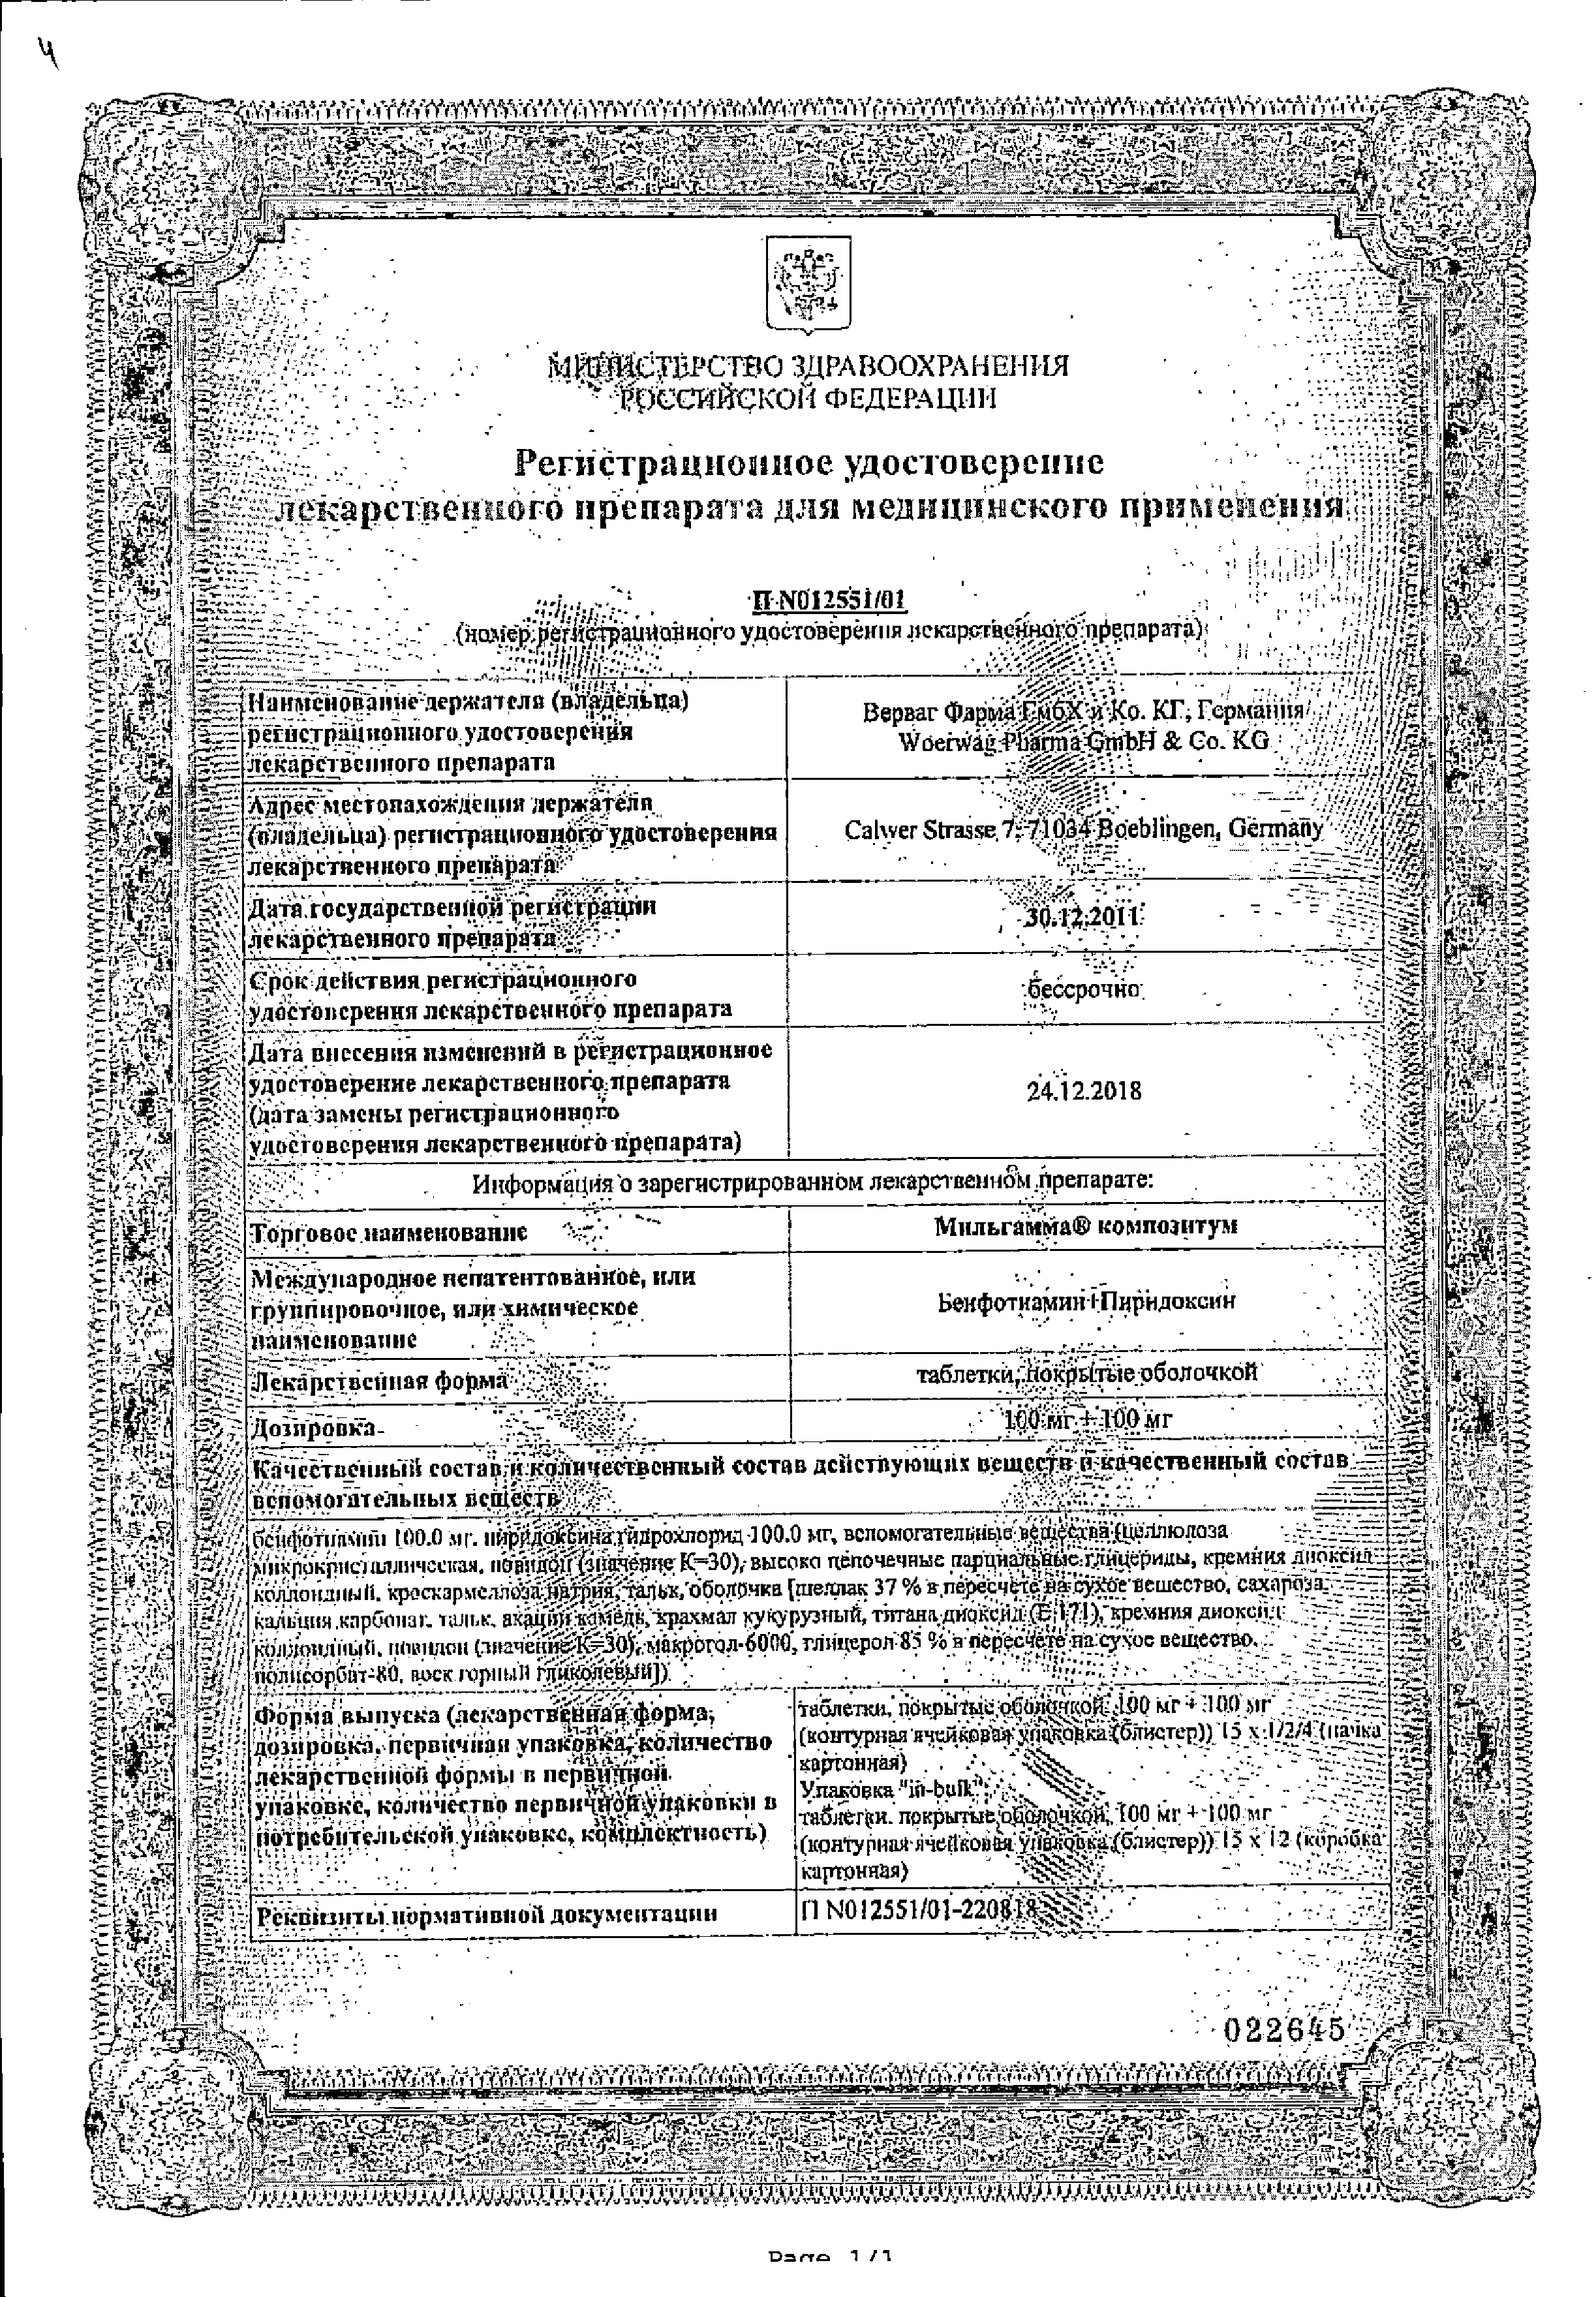 Мильгамма композитум сертификат